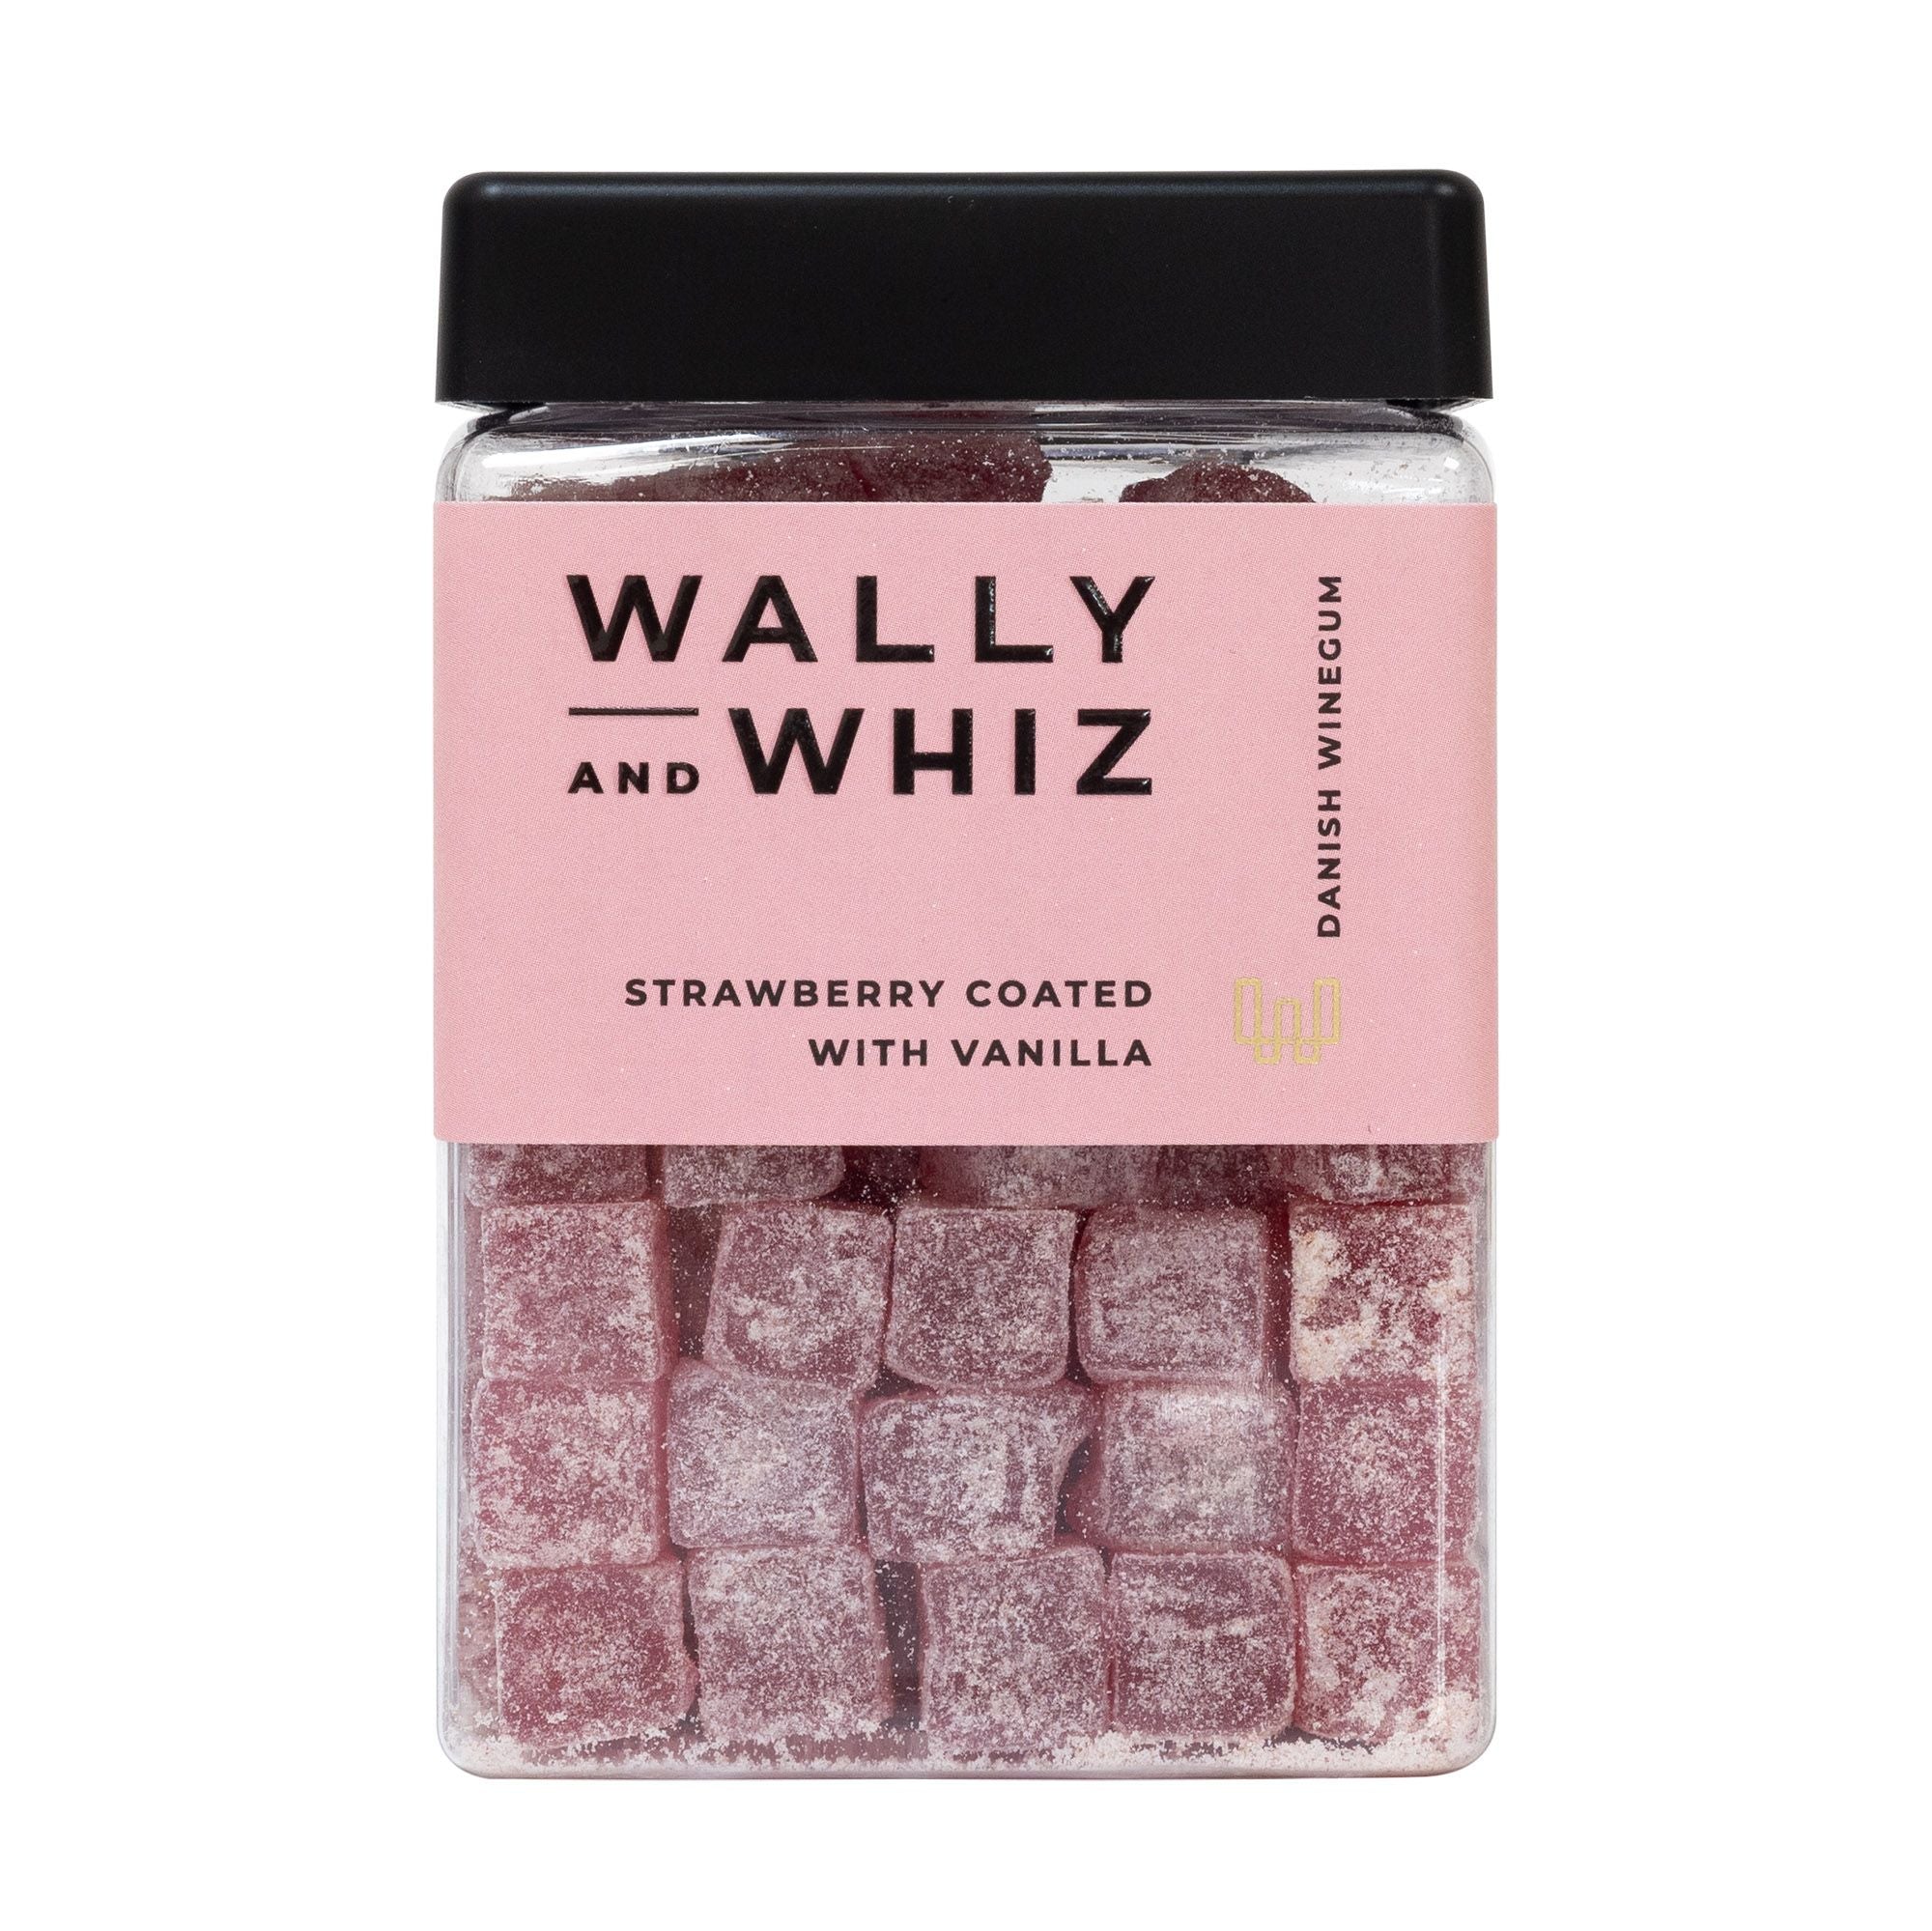 Wally And Whiz Zomerwijngomkubus, aardbei met vanille, 240 g